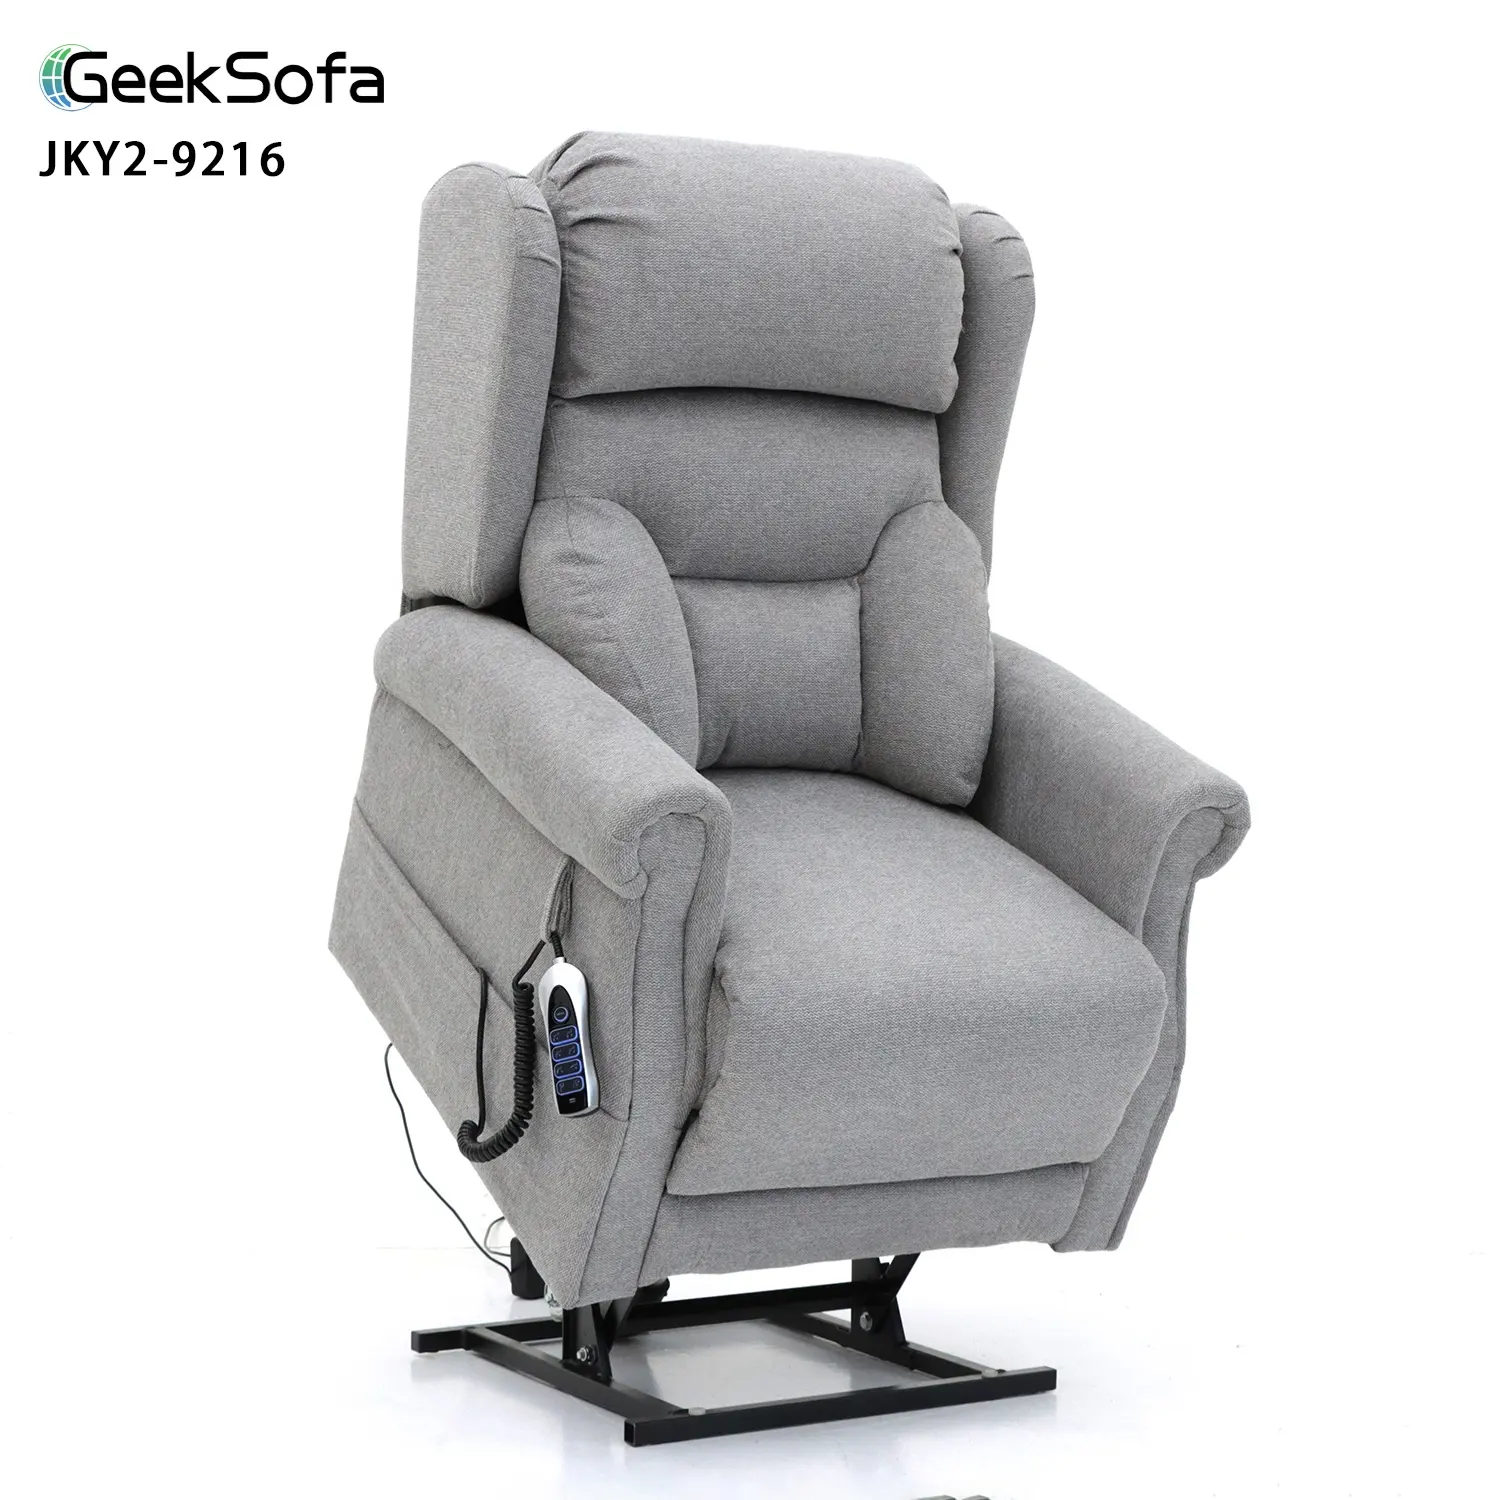 Geeksofa Quad Motor Power Electric Medical Lift Riser Recliner Chair with Power Headrest   Power Lumbar Support for The Elderly